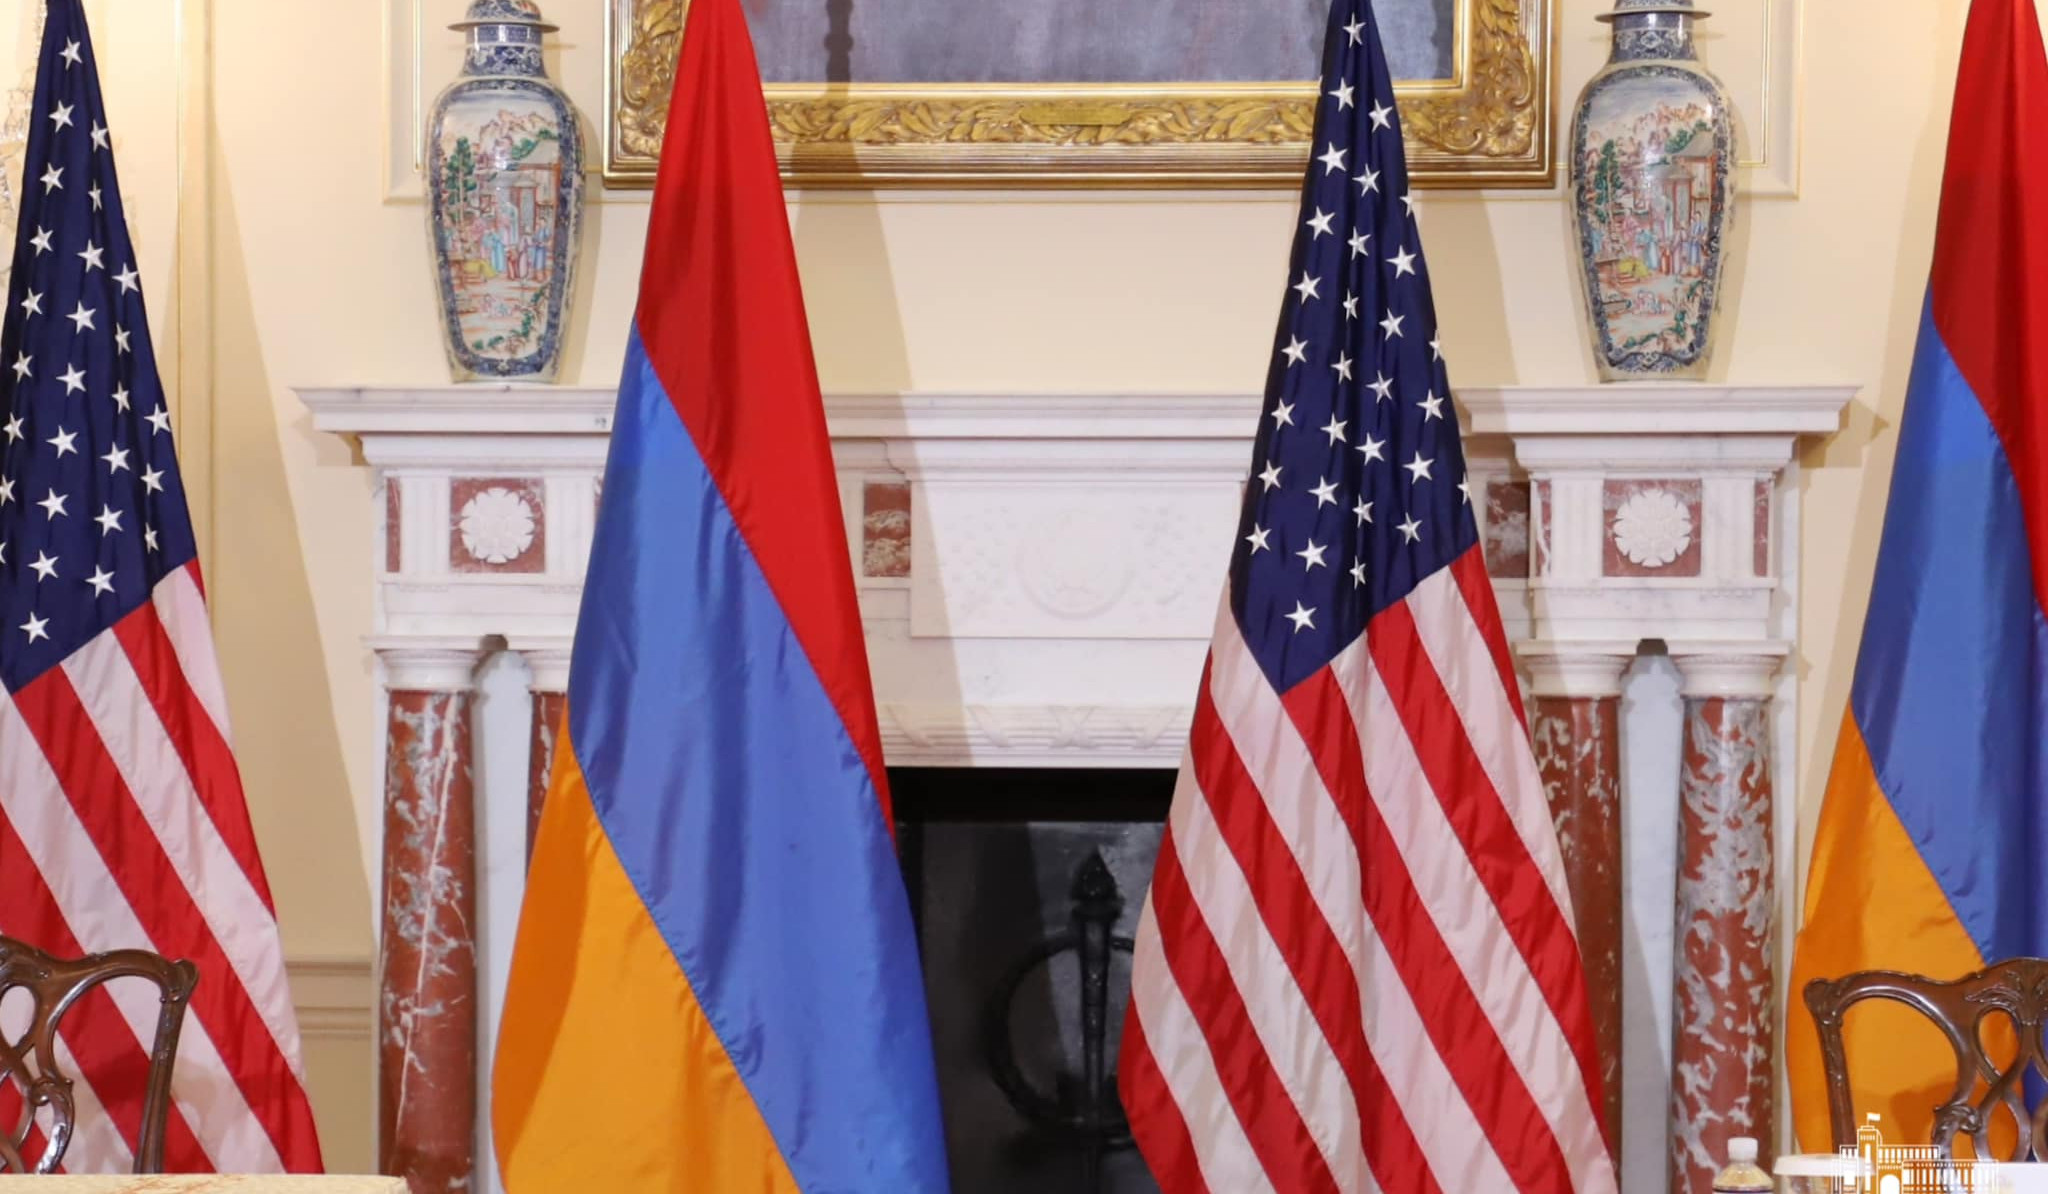 Capstone meeting of Armenia-US Strategic Dialogue to take place in Yerevan